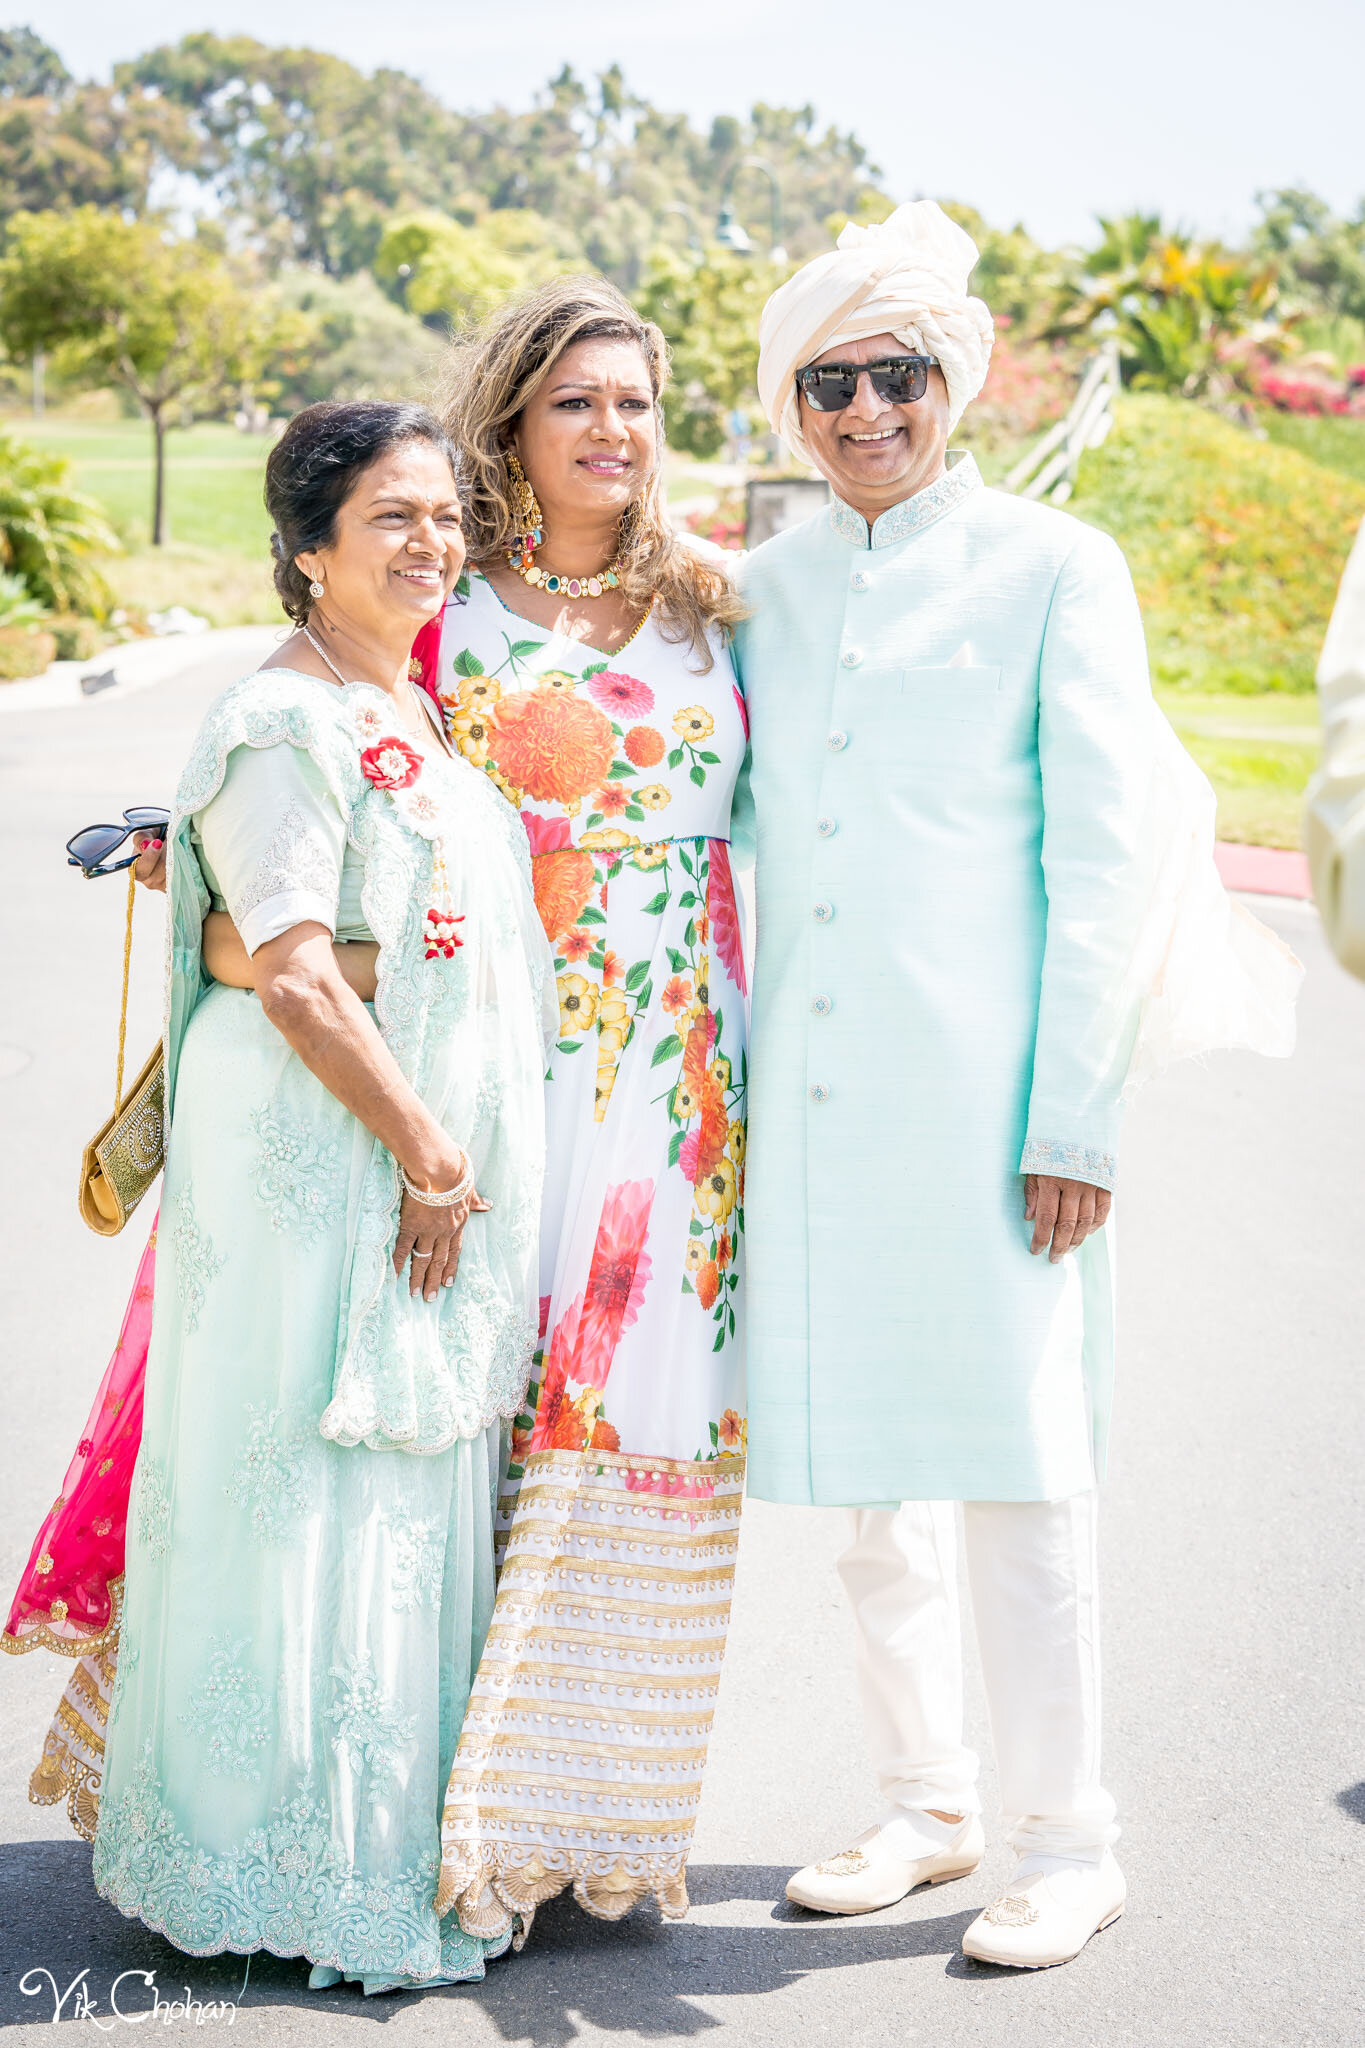 2021-07-30-Shaan-&-Megha-Wedding-Vik-Chohan-Photography-Photo-Booth-Social-Media-VCP-070.jpg